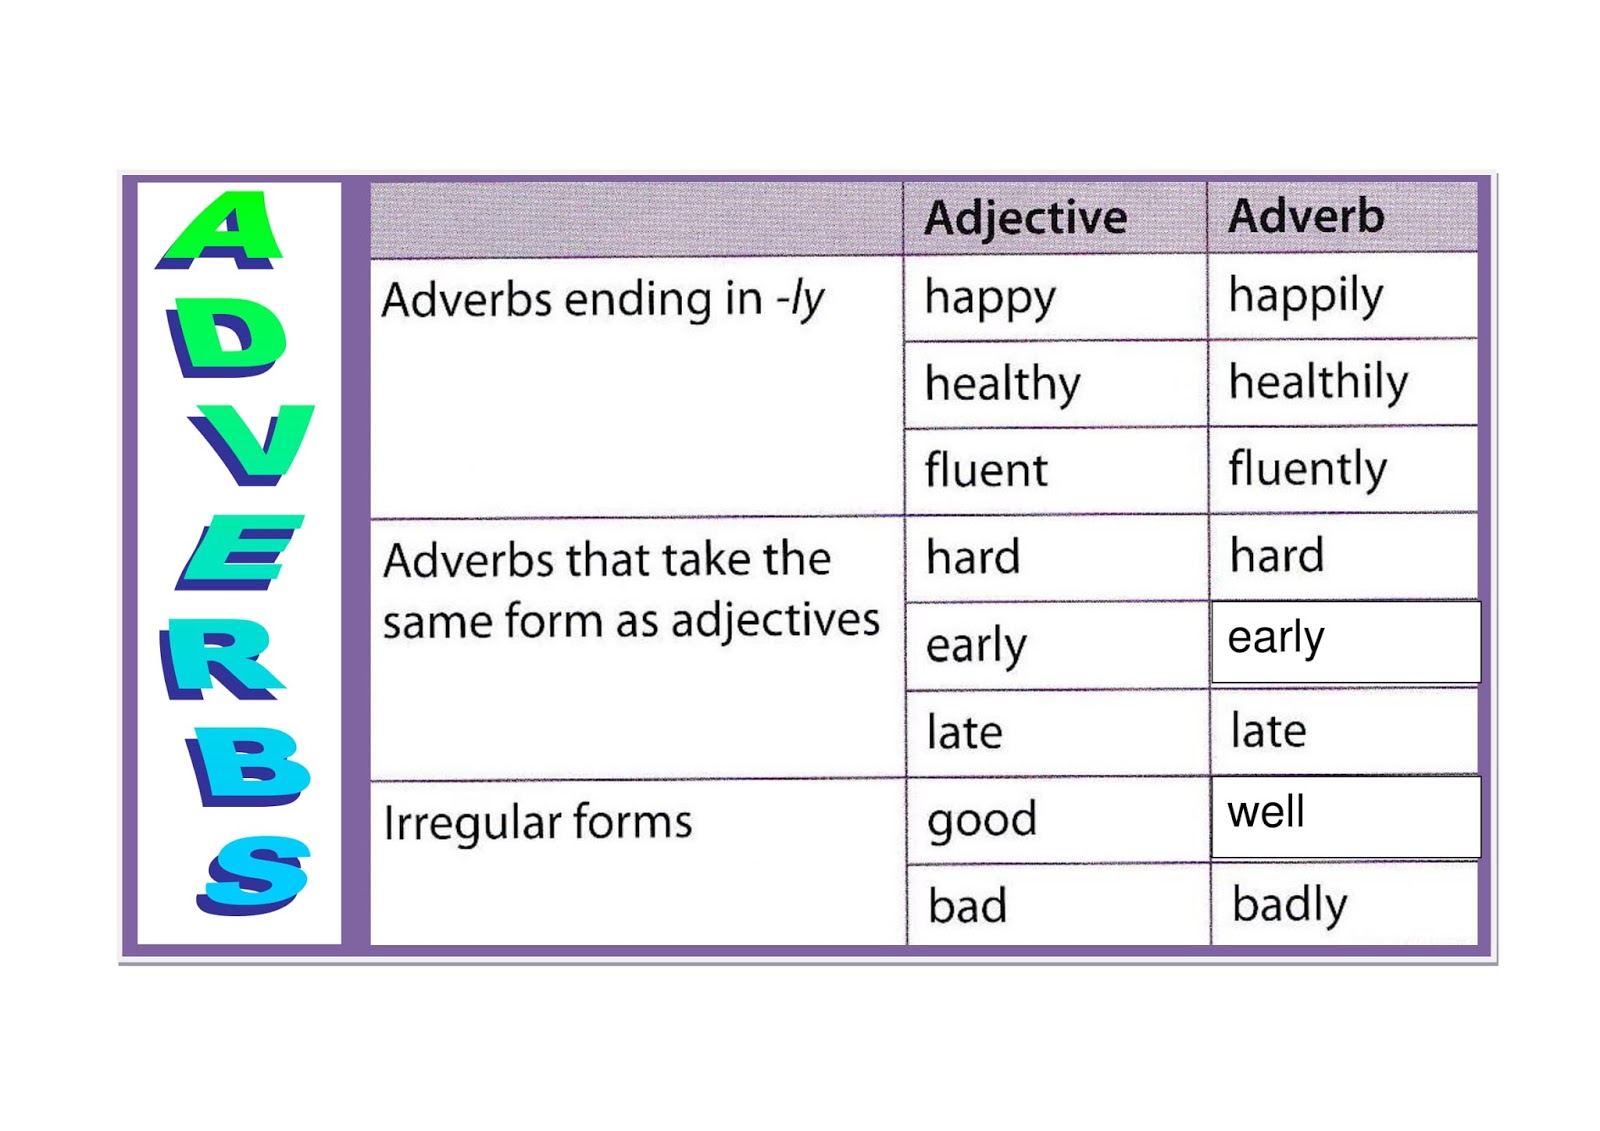 Bad adverb form. Happy adverb. Adverb form. Fluent наречие в английском. Irregular adjectives and adverbs.